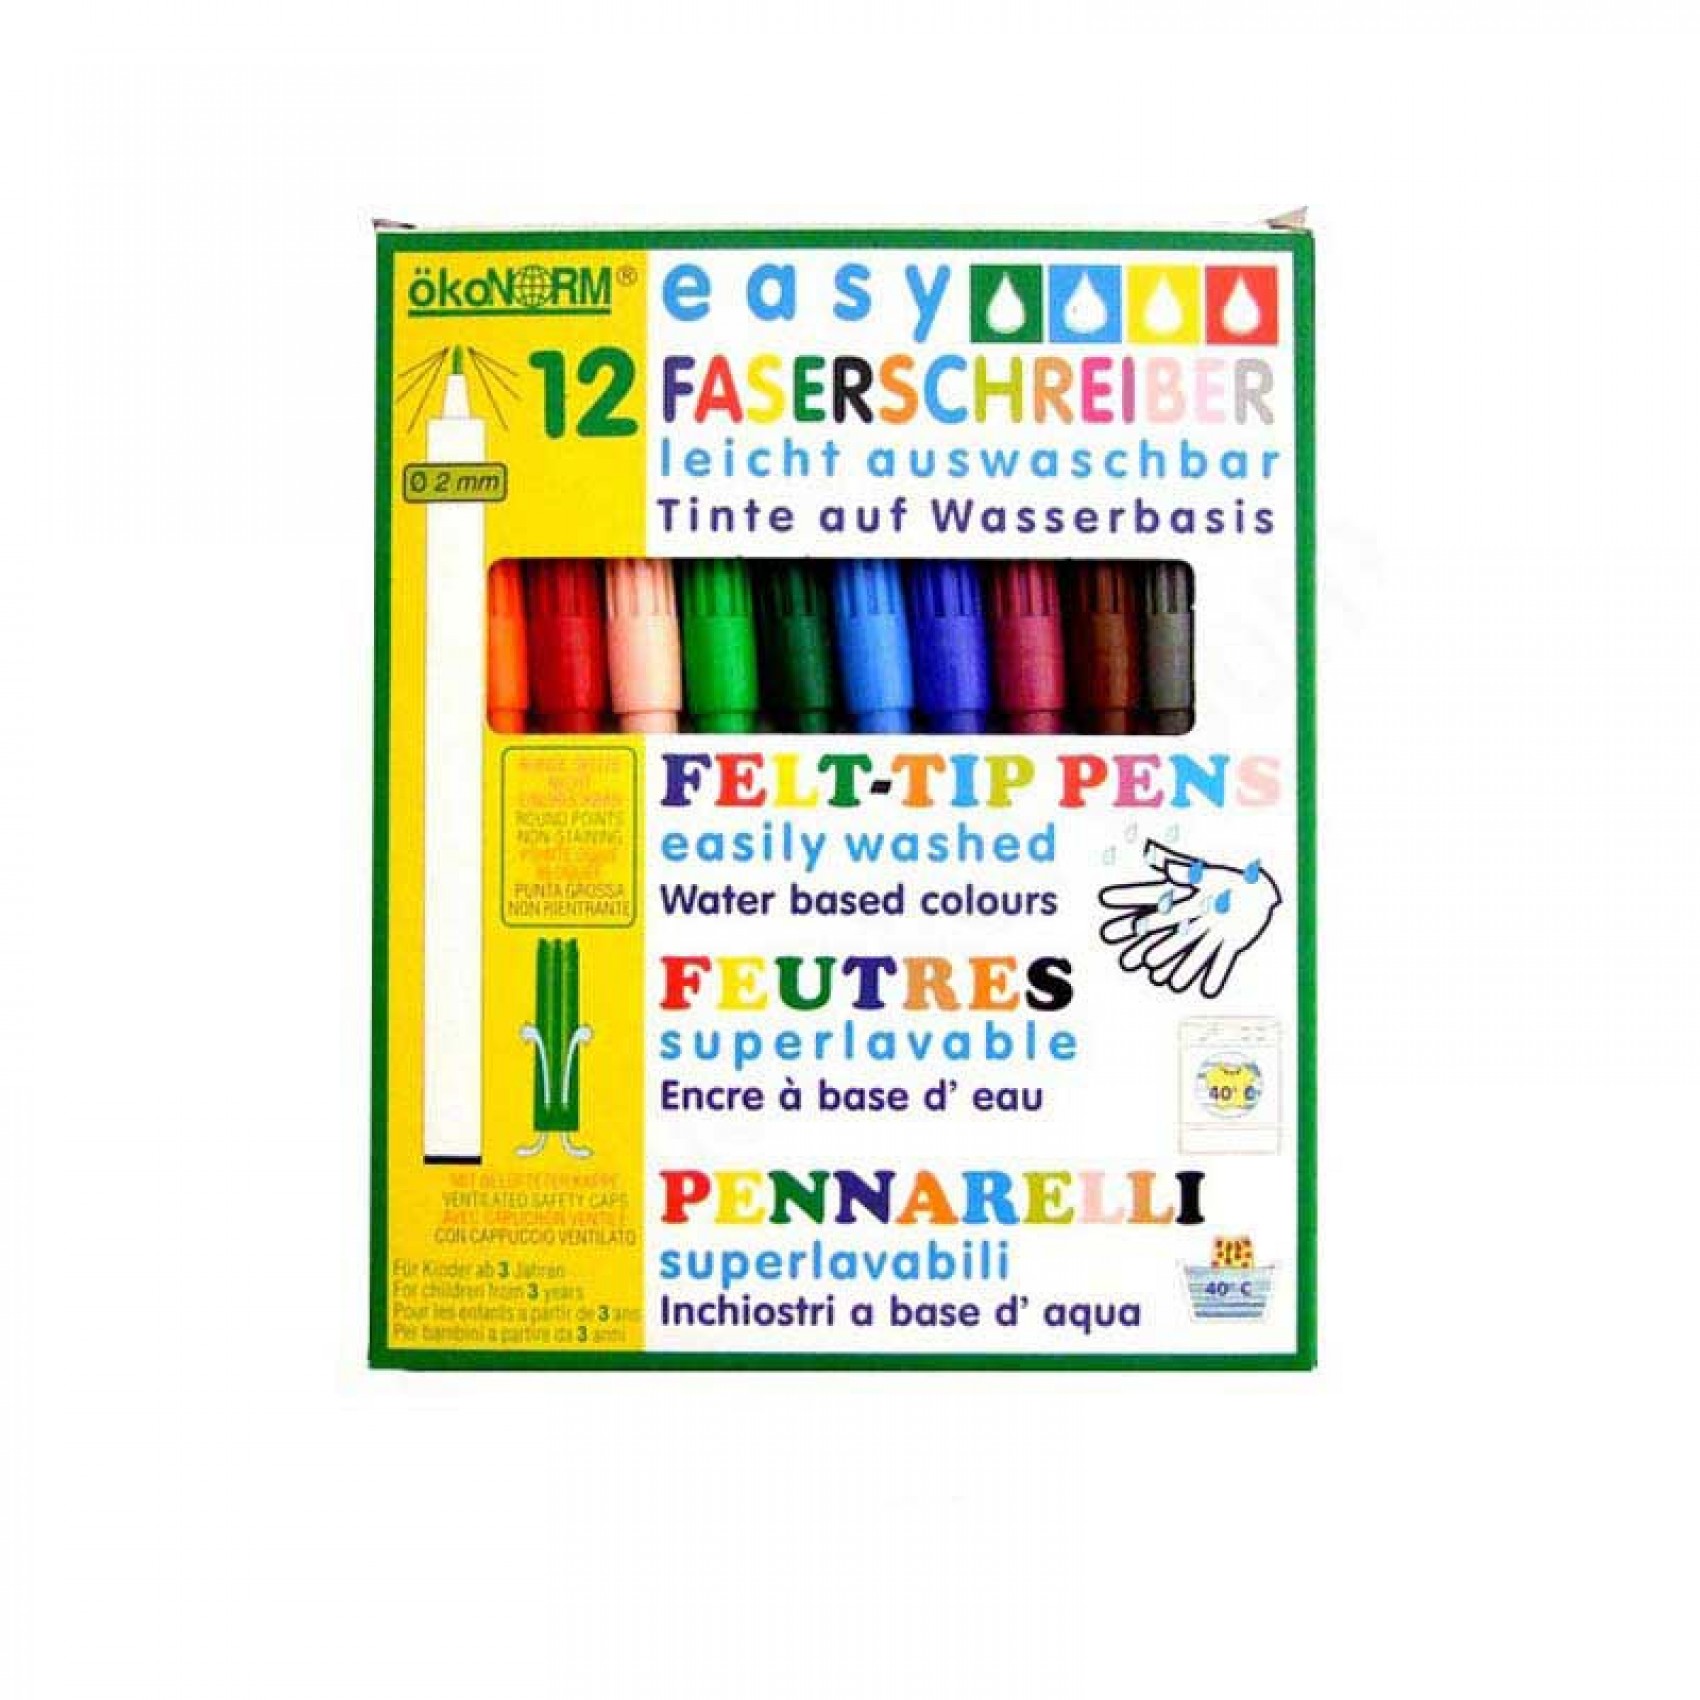 12 crayons feutres fins - Ökonorm